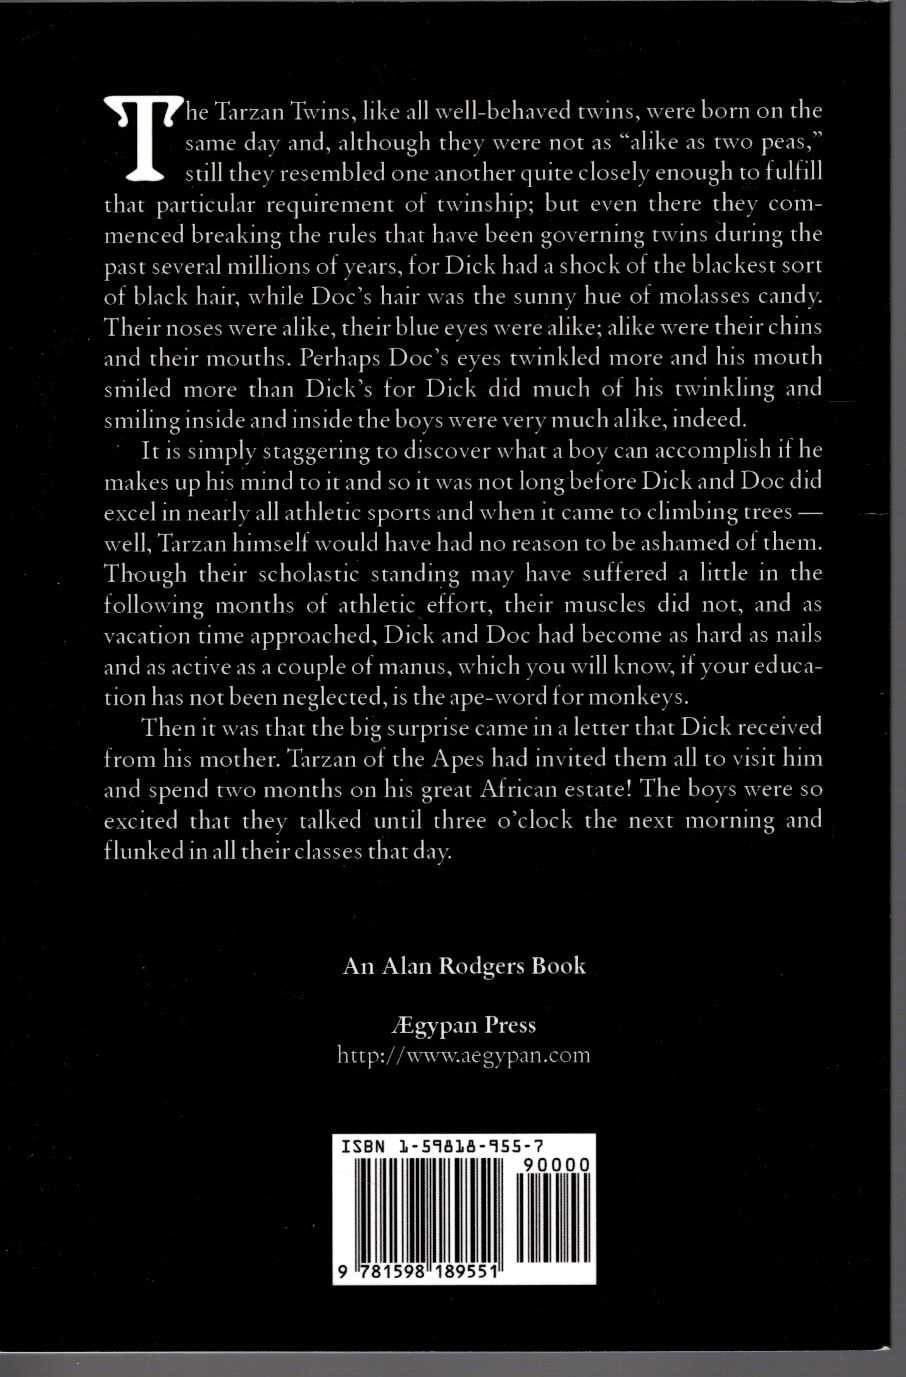 Edgar Rice Burroughs  THE TARZAN TWINS magnified rear book cover image